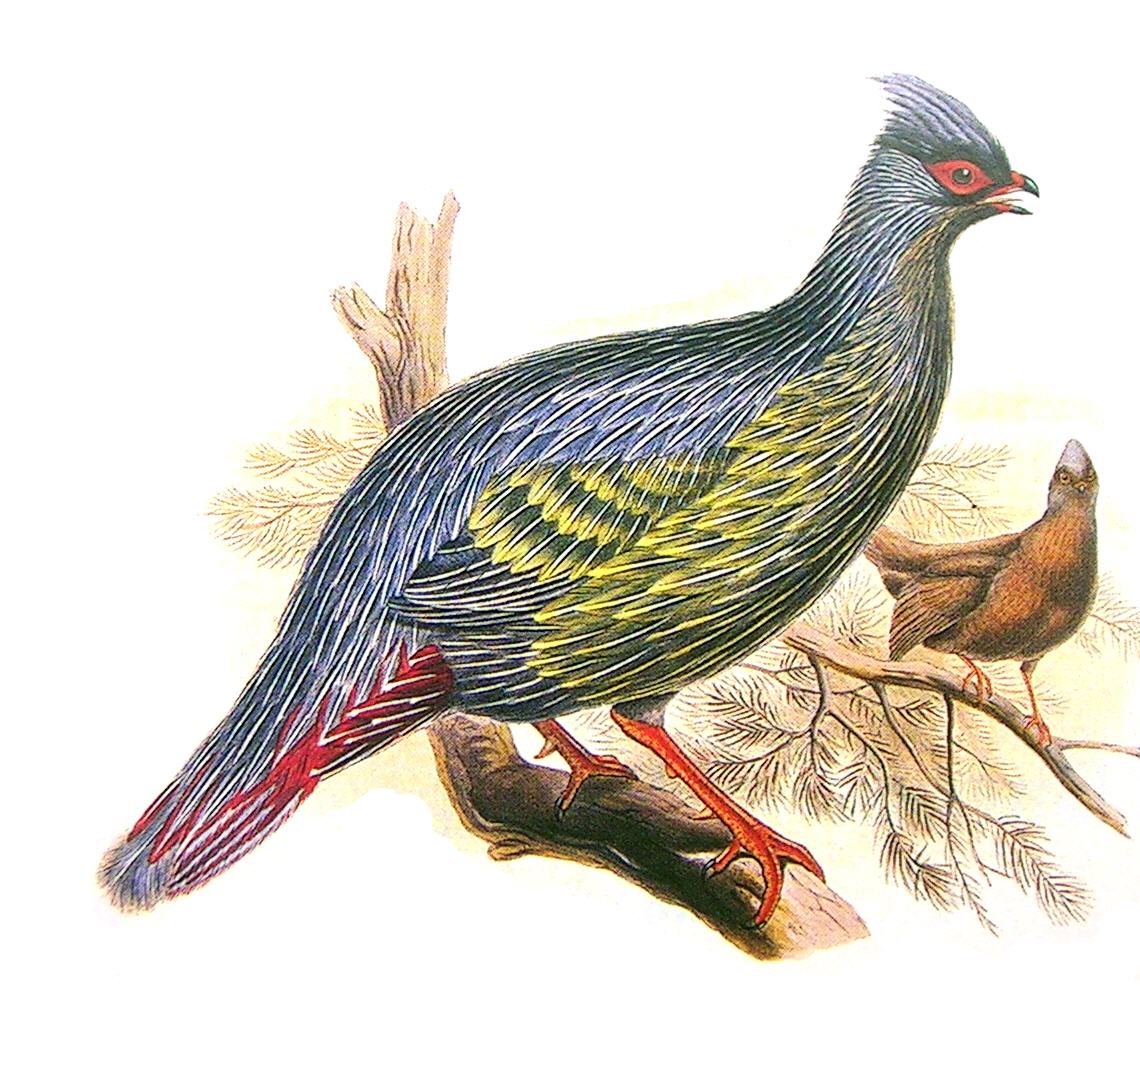 Blood Pheasant (Ithaginis cruentus) - Wiki